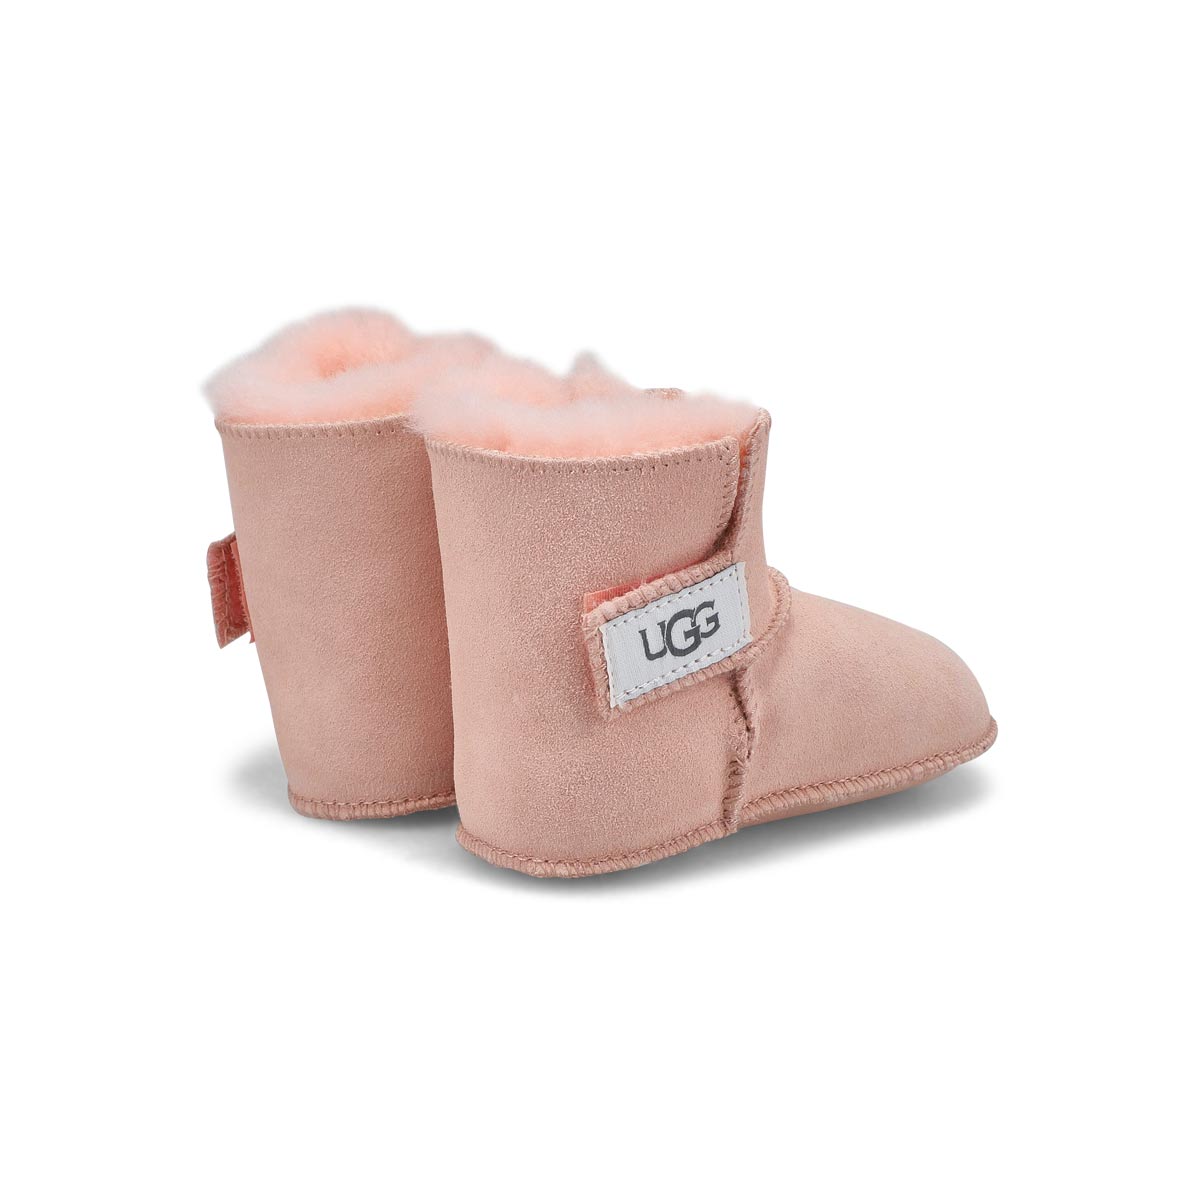 UGG Infants' Erin Fashion Boot - Pink | SoftMoc.com